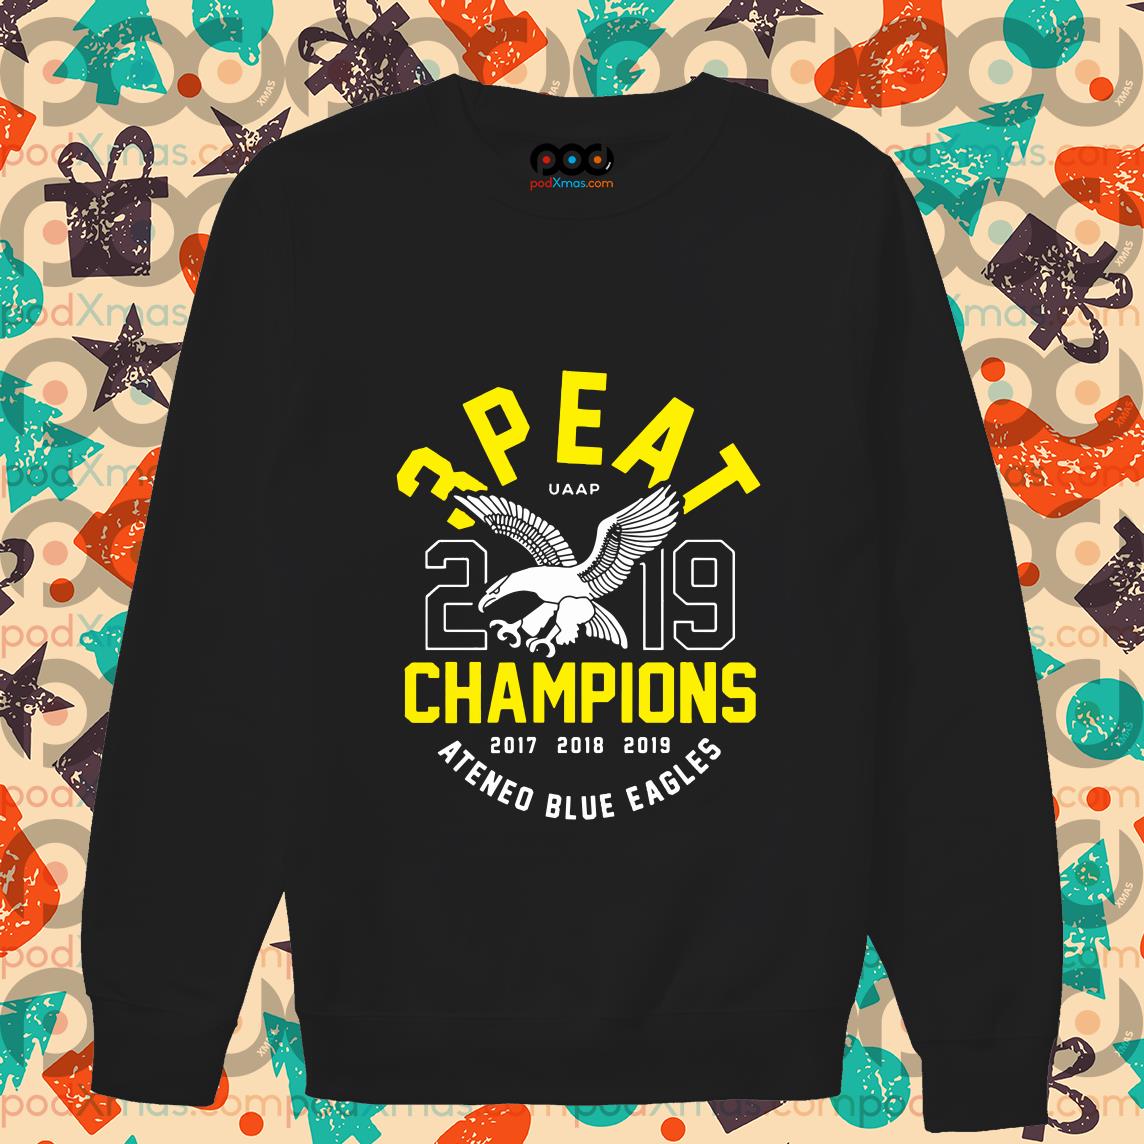 3 Peat UAAP 2019 Champions Ateneo blue eagles shirt, hoodie